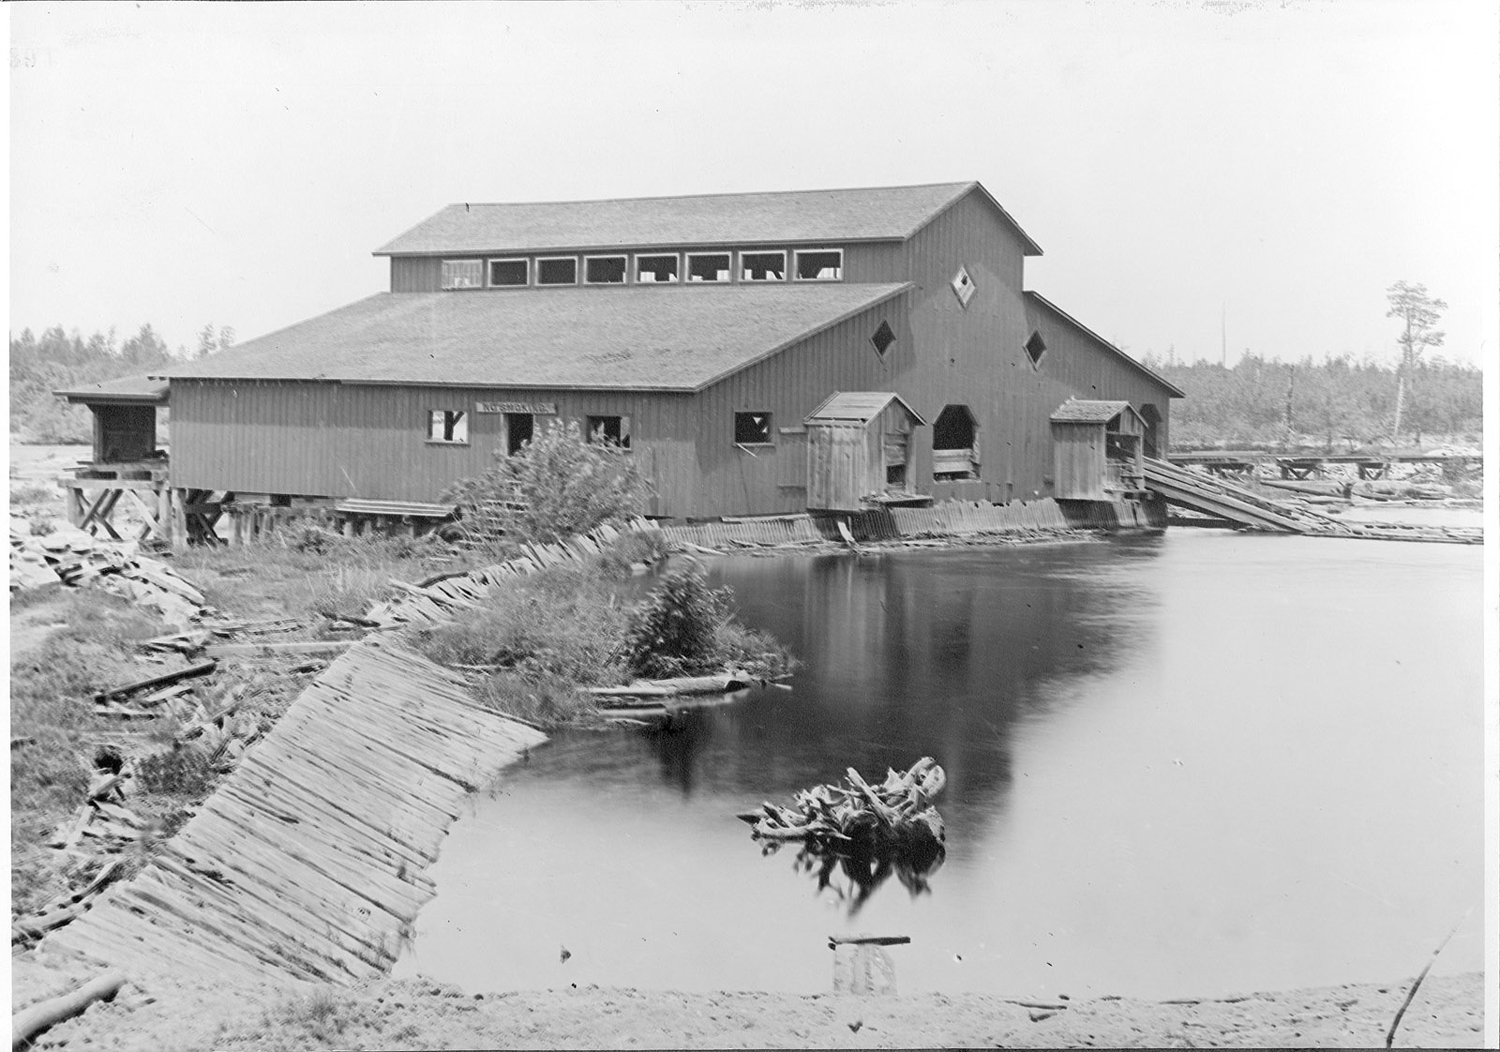 The Biron Mill